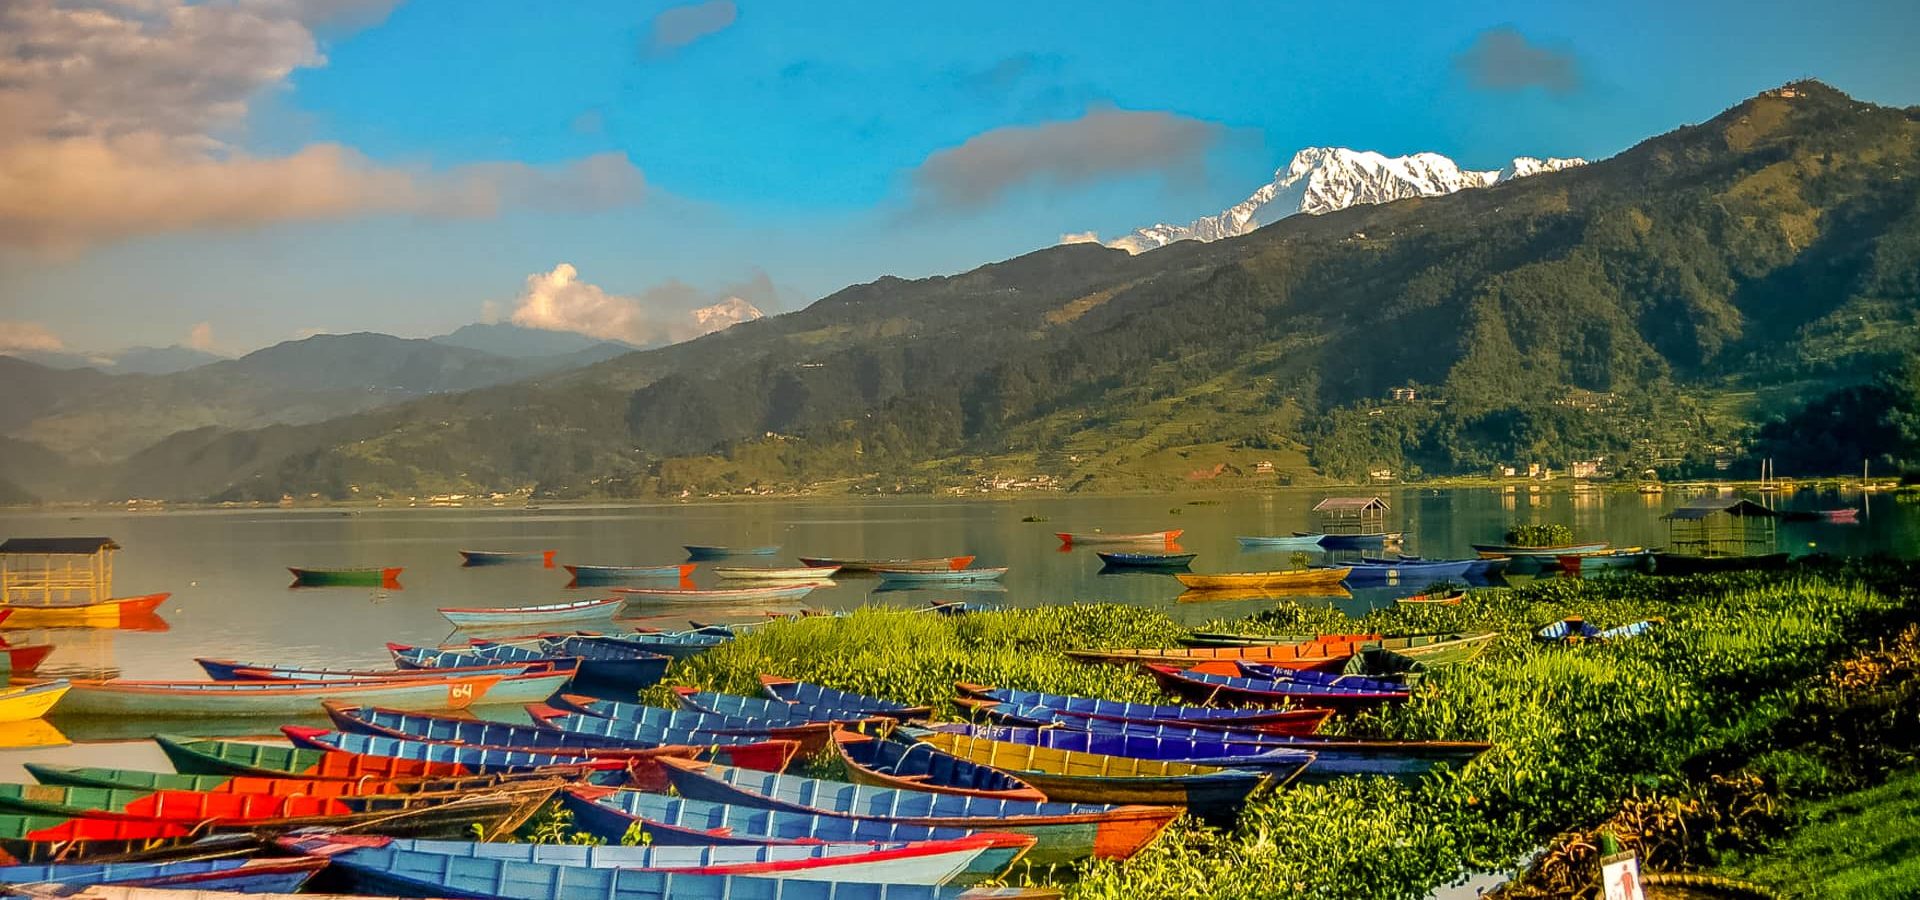 essay on my favourite place pokhara